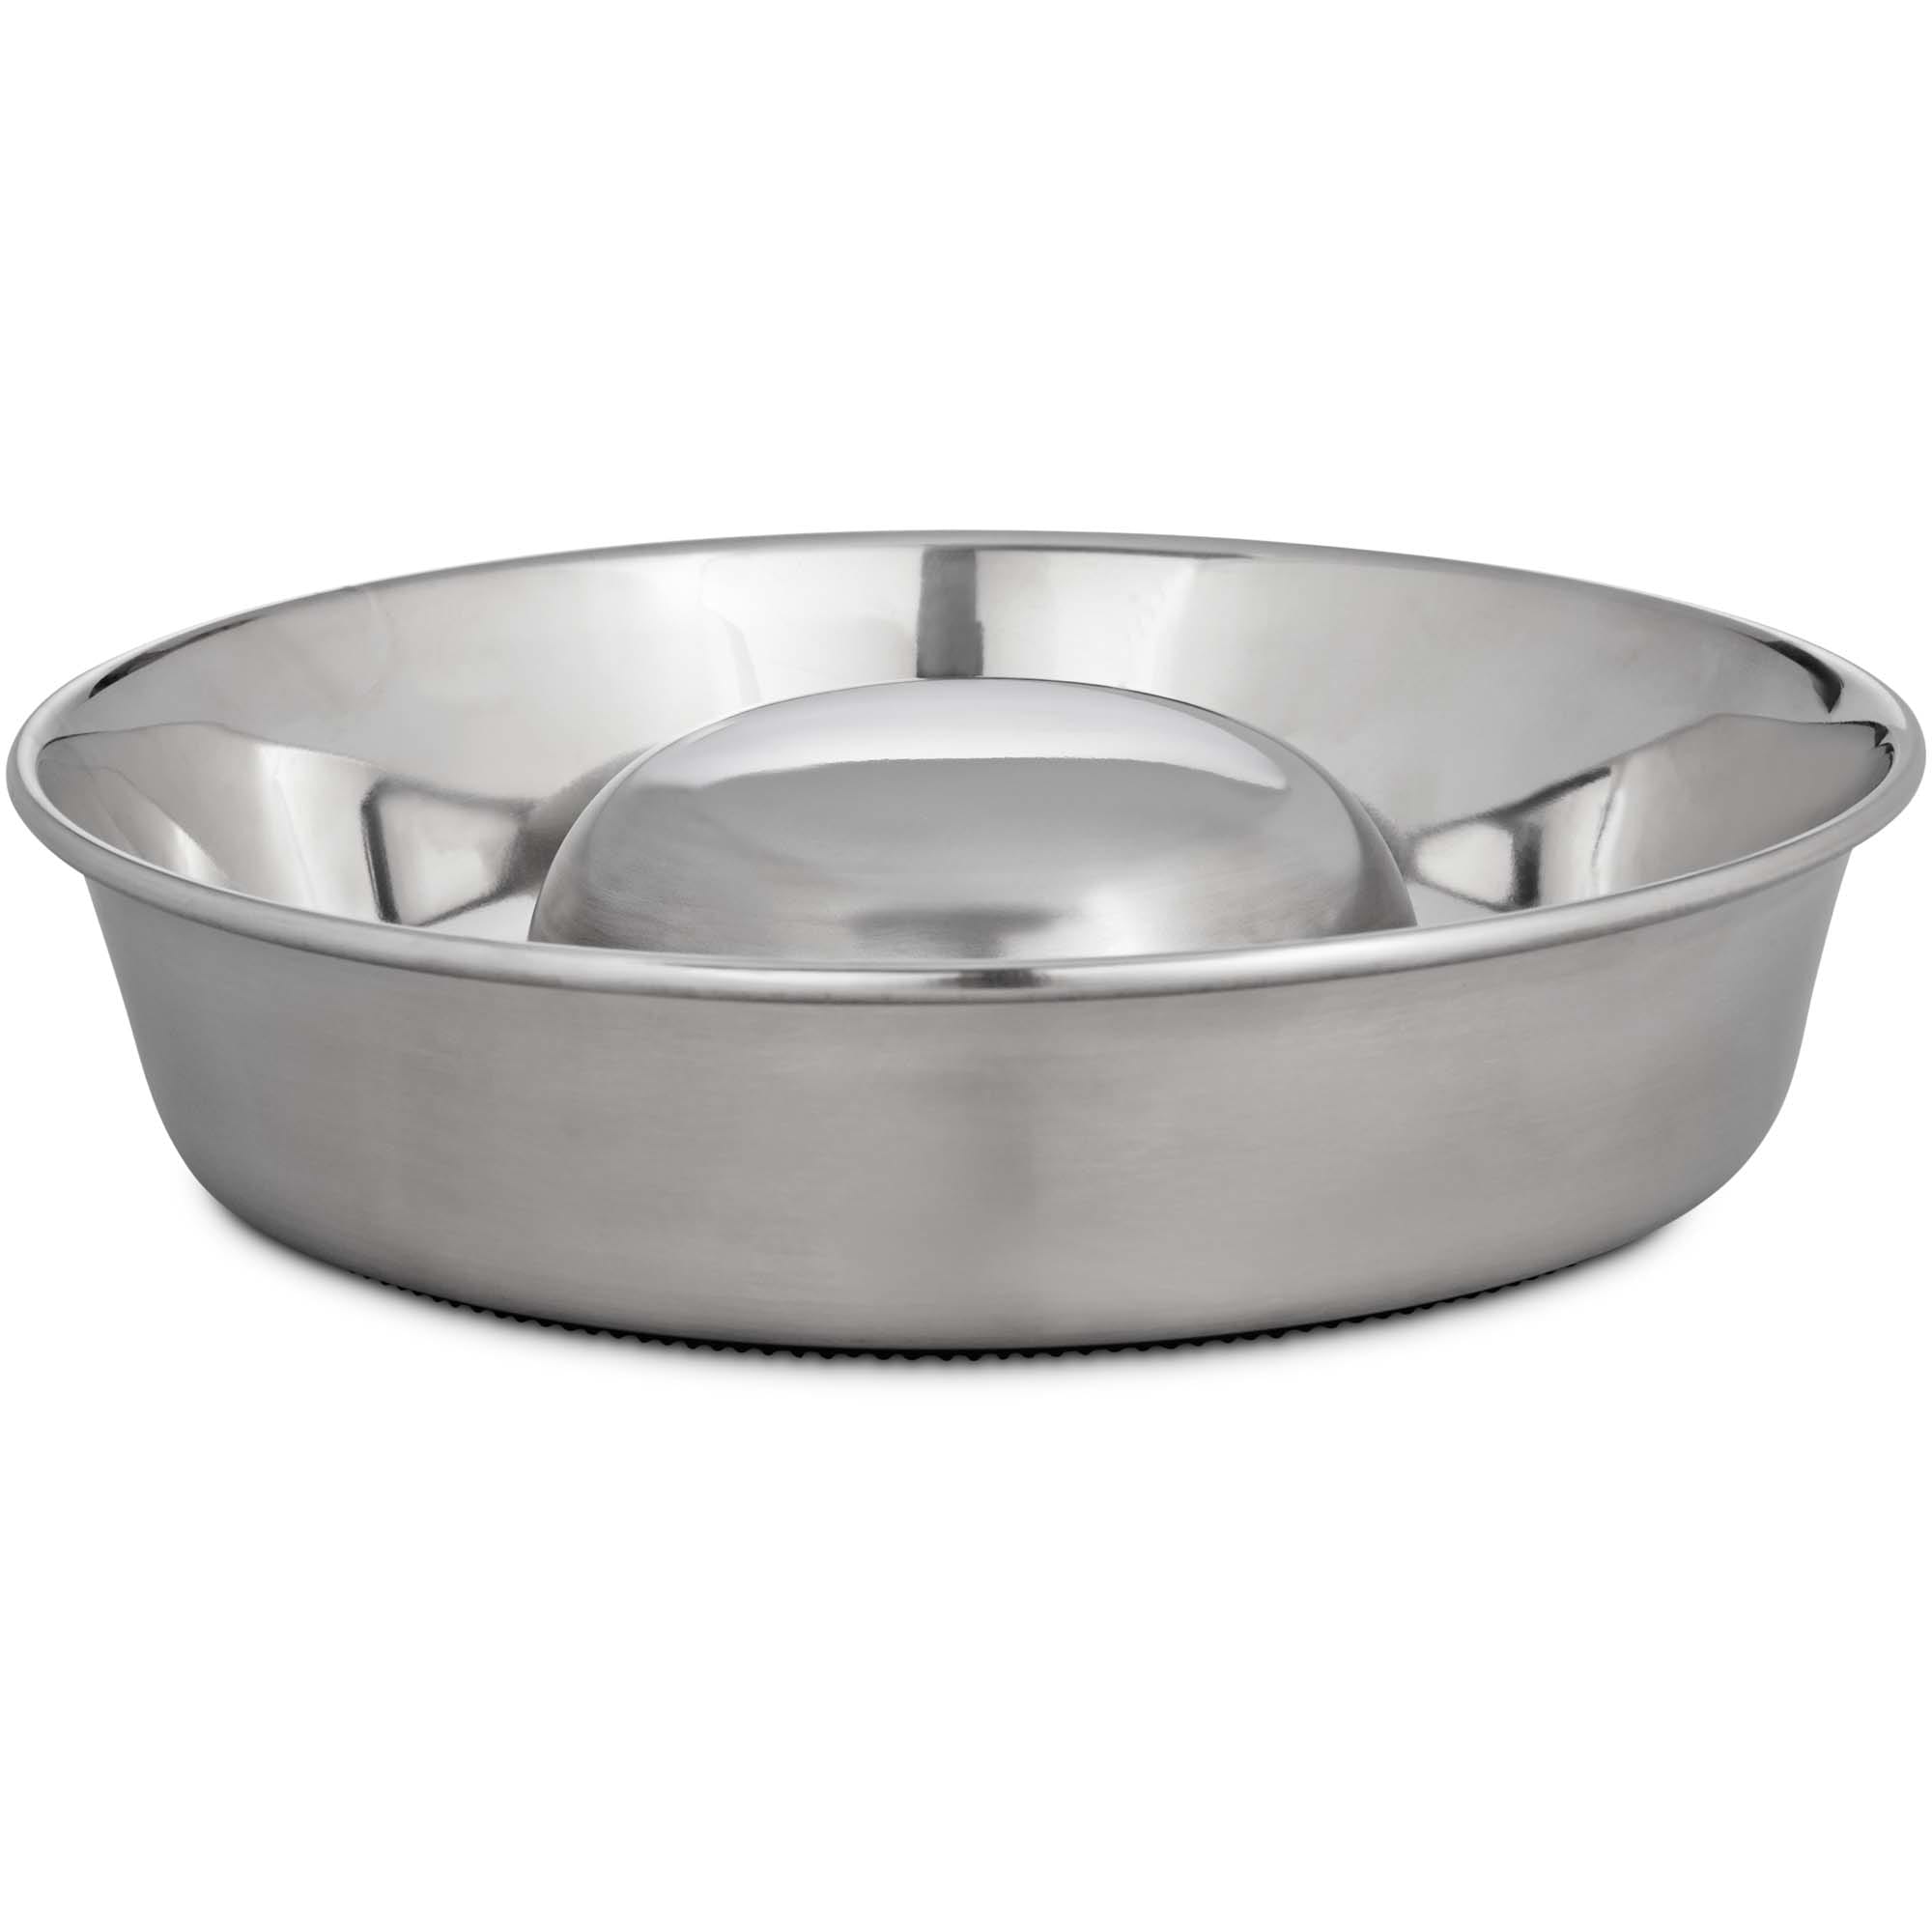 Stainless Steel Slow Feeder Dog Bowl | Orvis